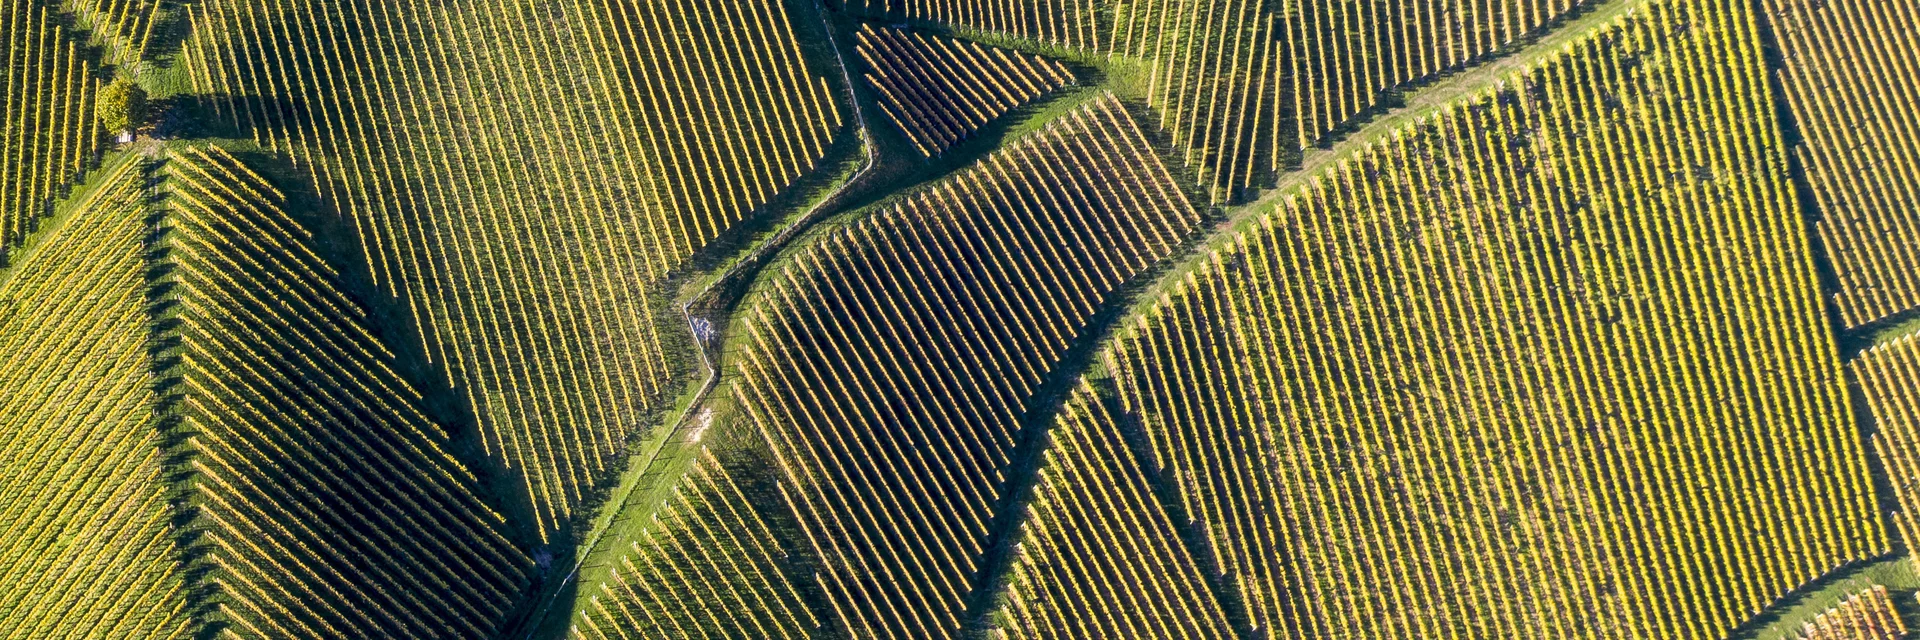 The Wine Cycle Tour, Gamlitz | © Steiermark Tourismus | Tom Lamm